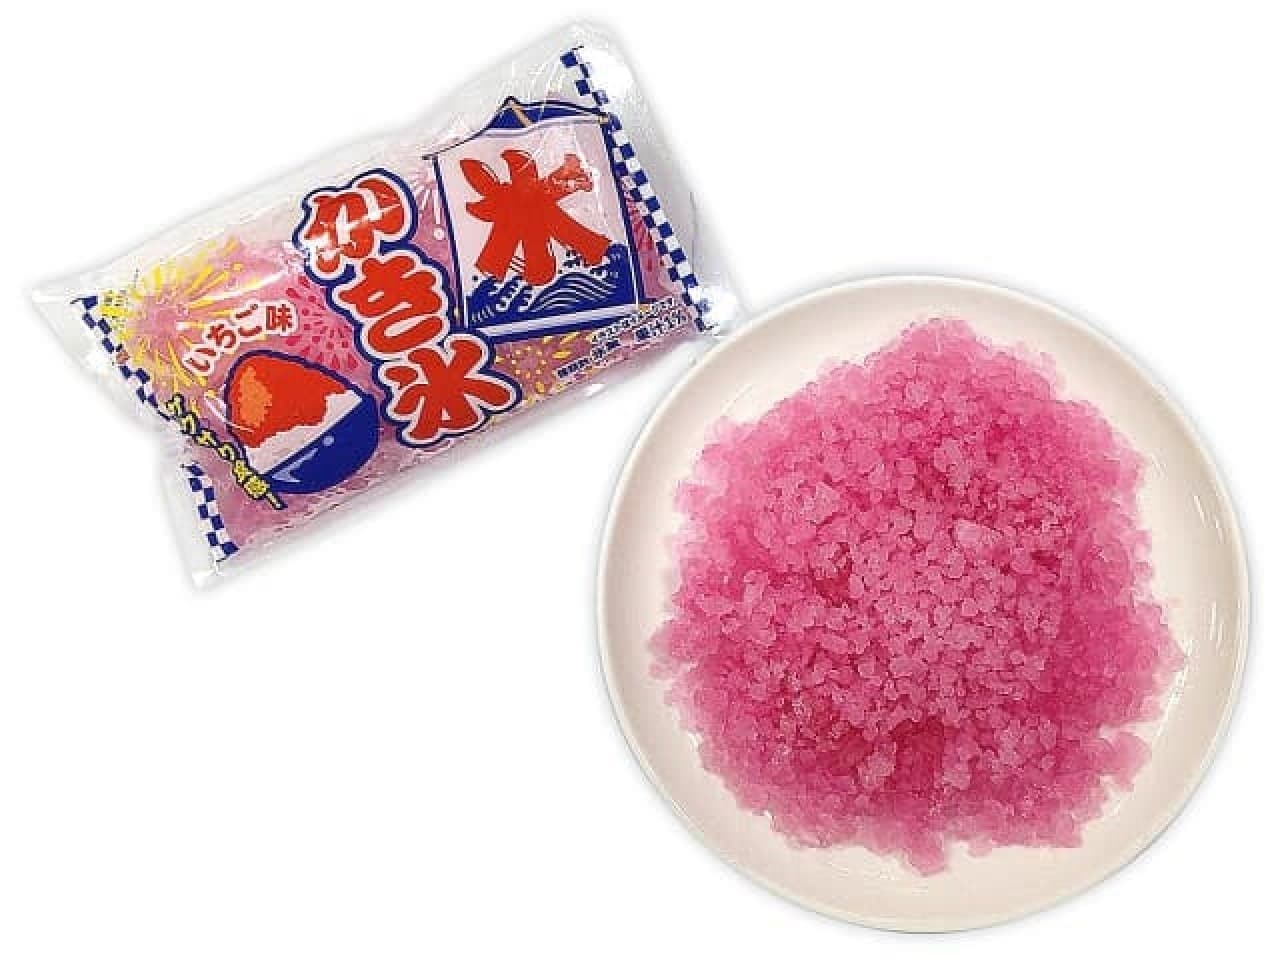 7-ELEVEN "Futaba Shaved Ice Strawberry Flavor (bag)